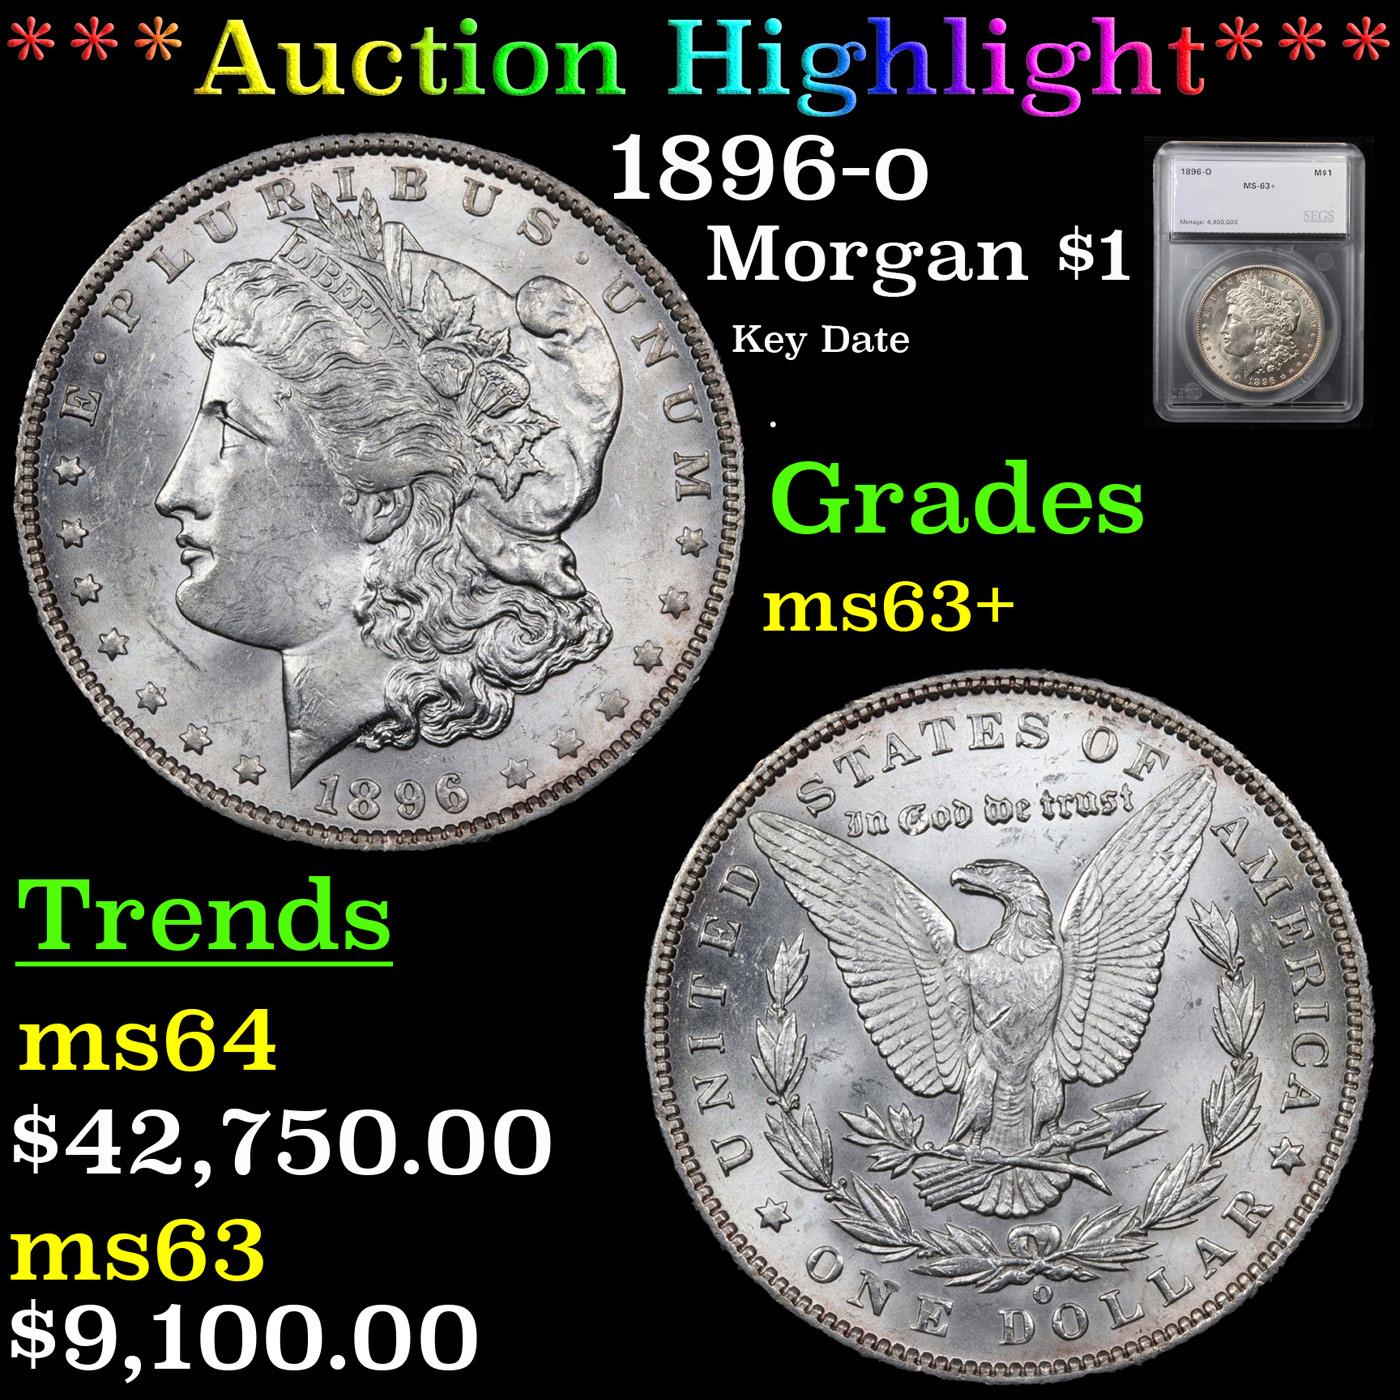 ***Auction Highlight*** 1896-o Morgan Dollar $1 Graded ms63+ By SEGS (fc)